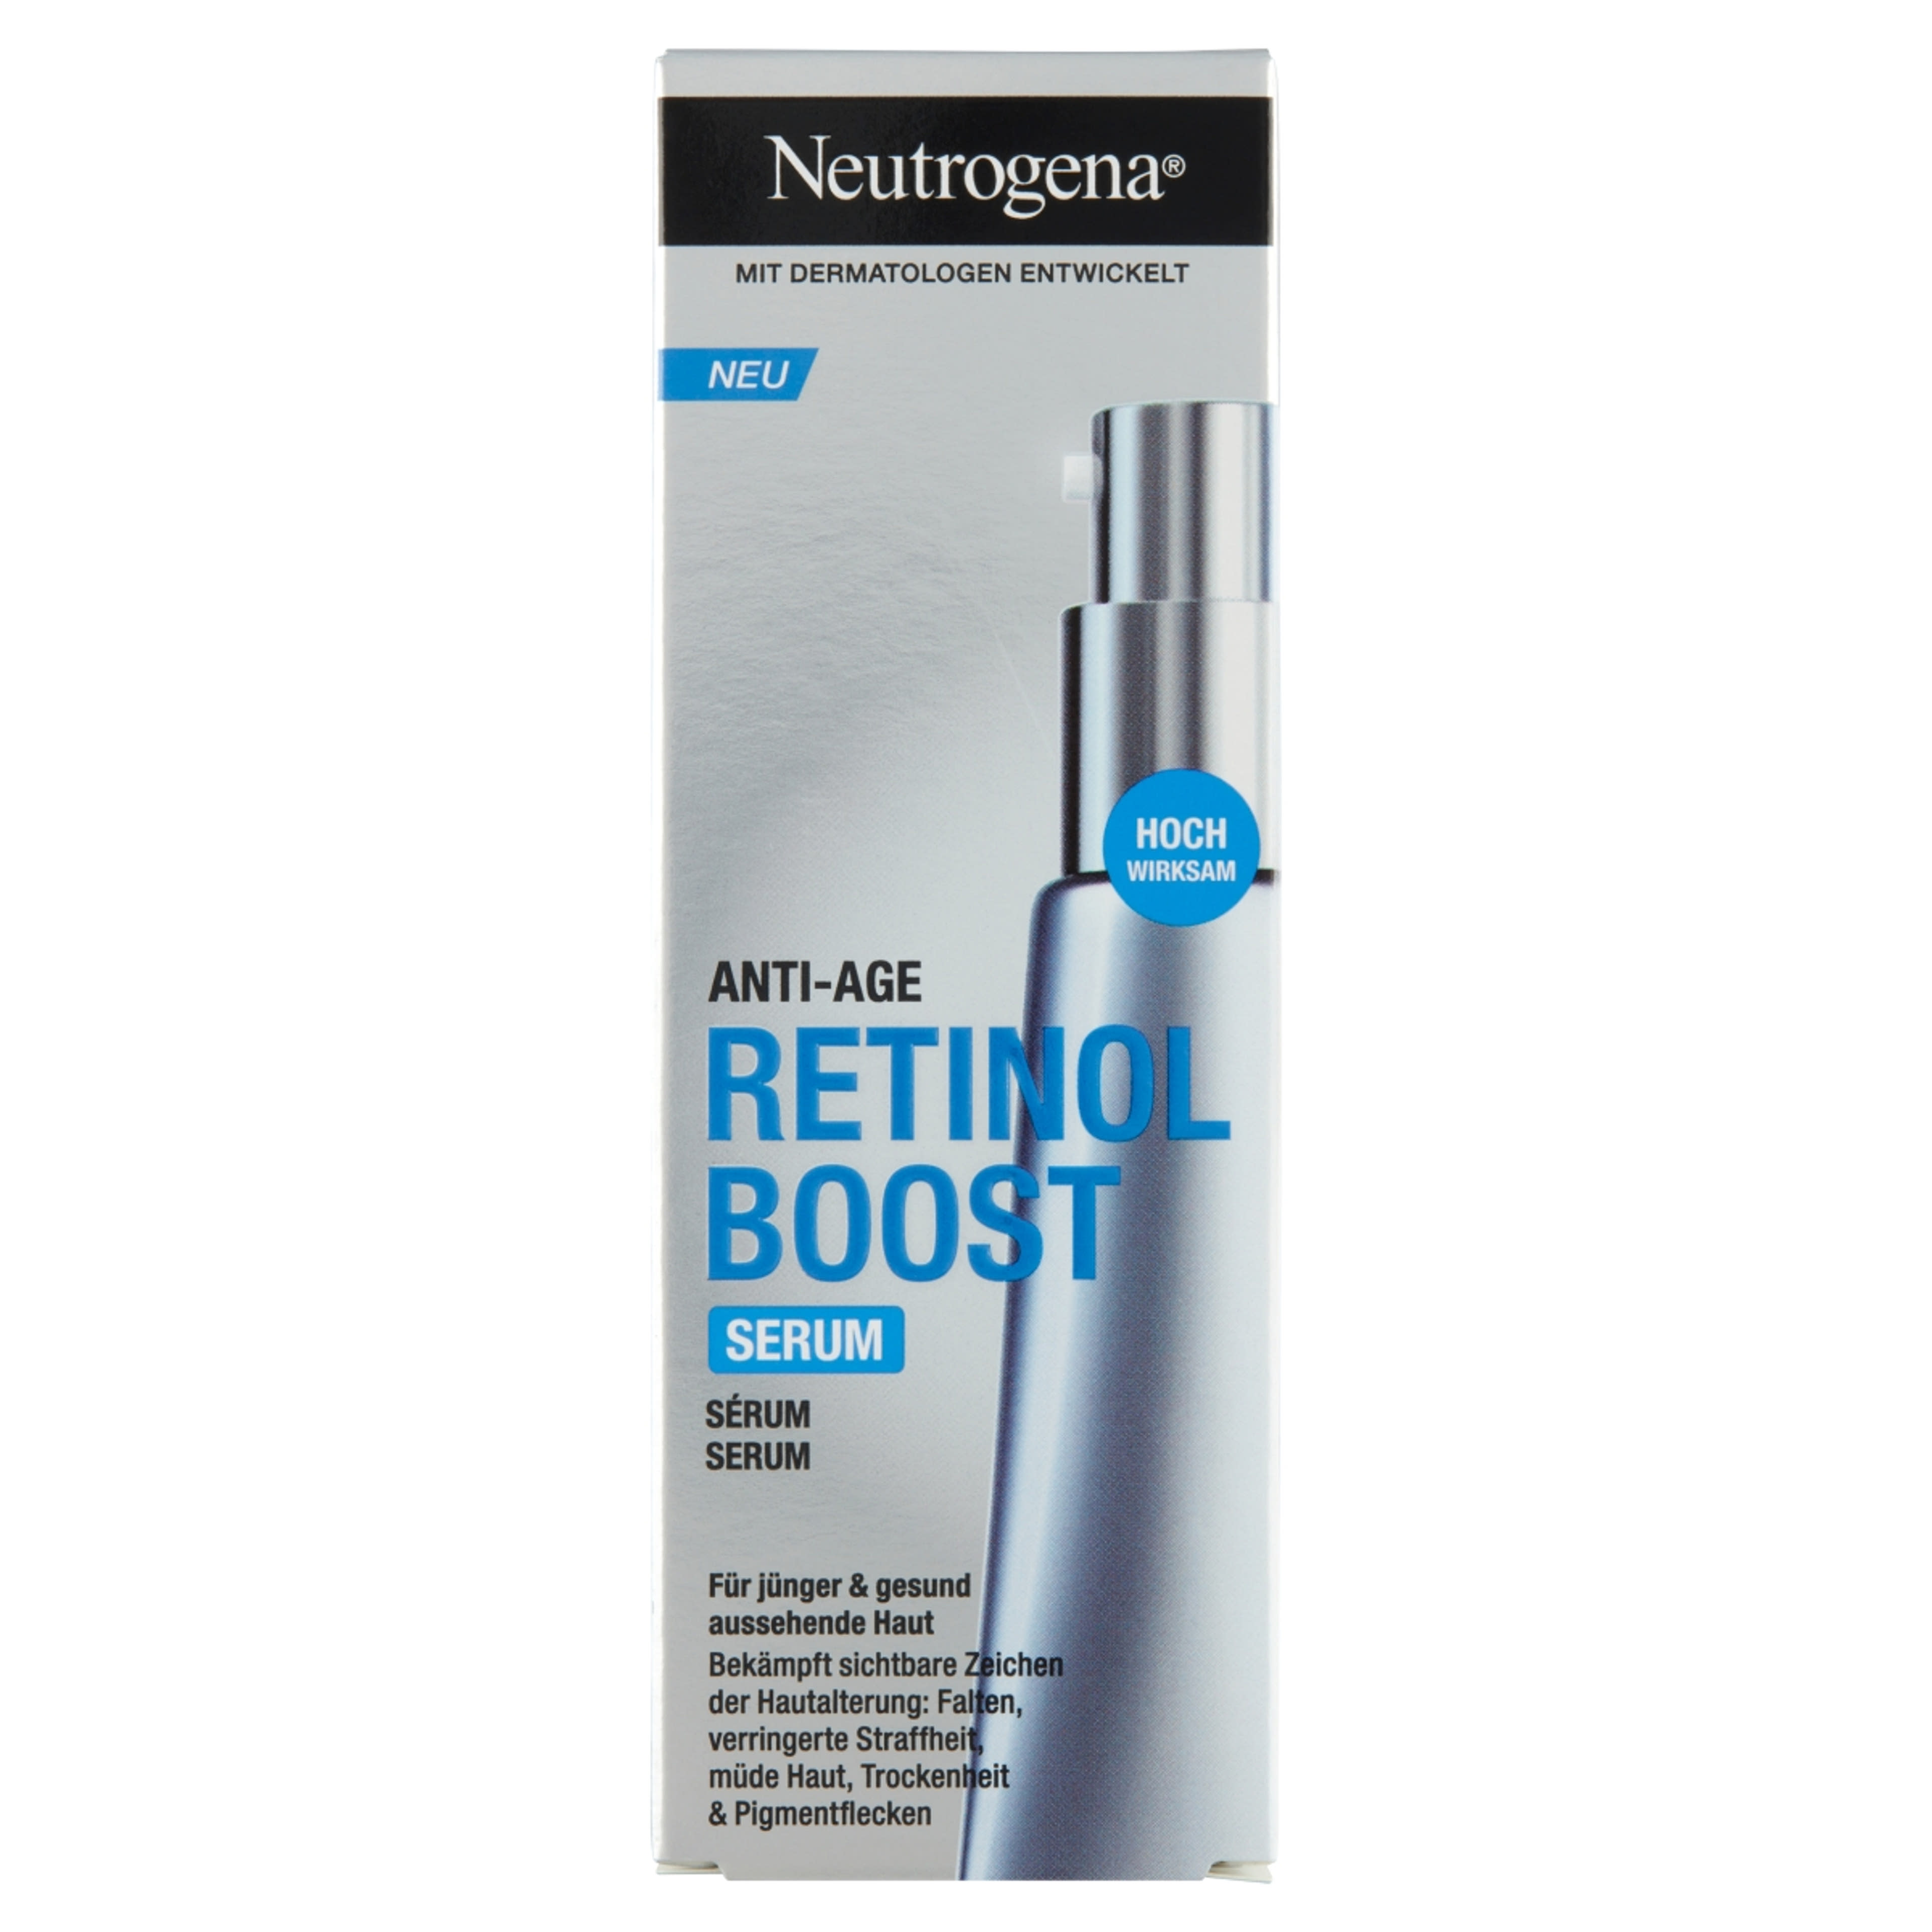 Neutrogena Retinol Boost szérum - 30 ml-1